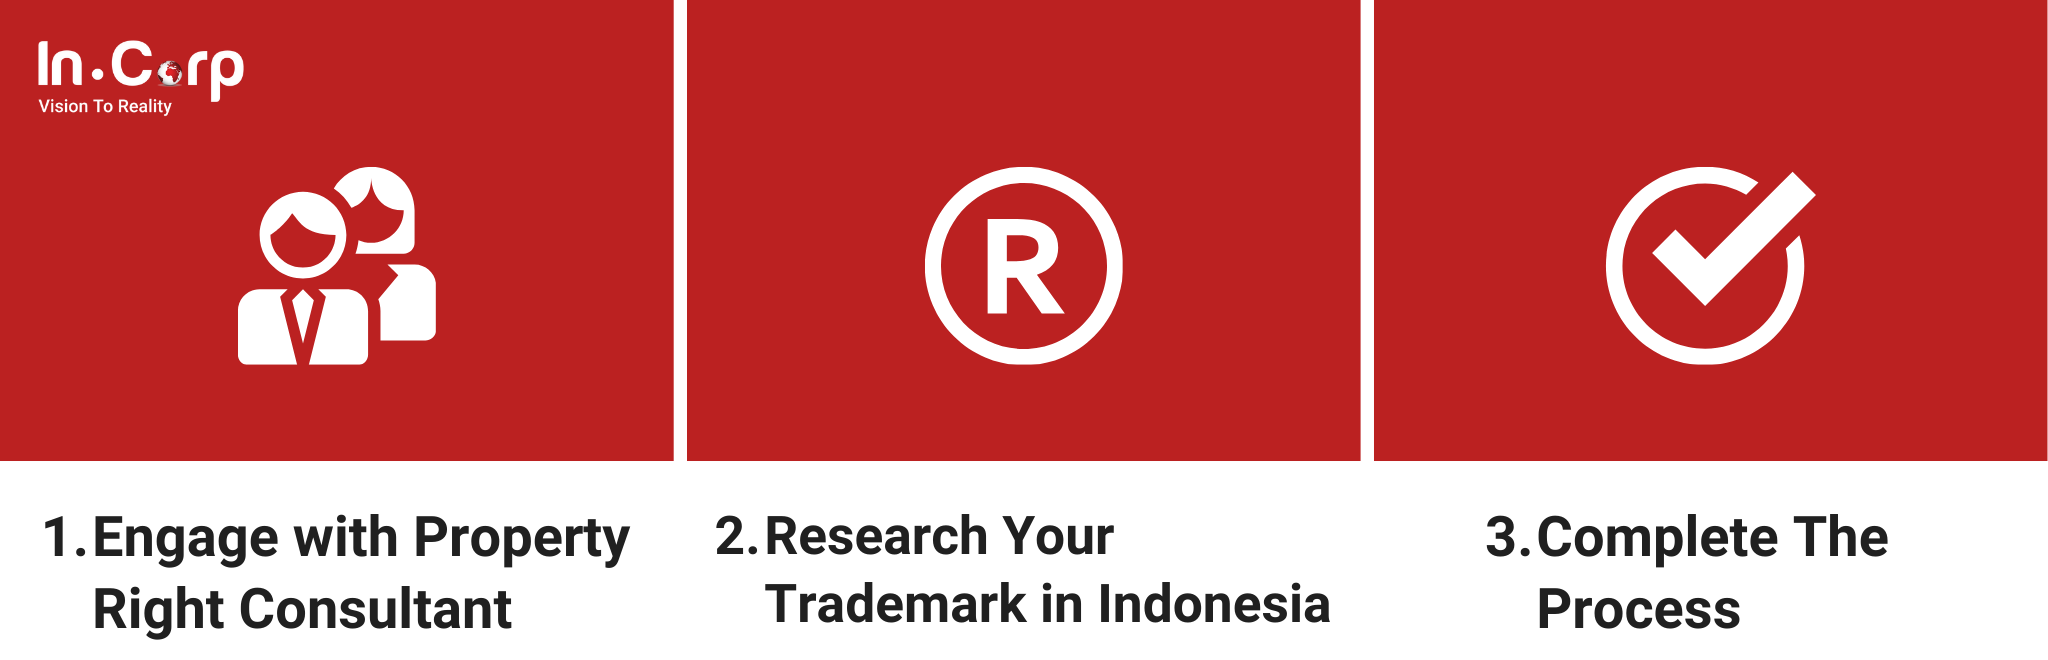 Trademark Registration in Indonesia Simplified